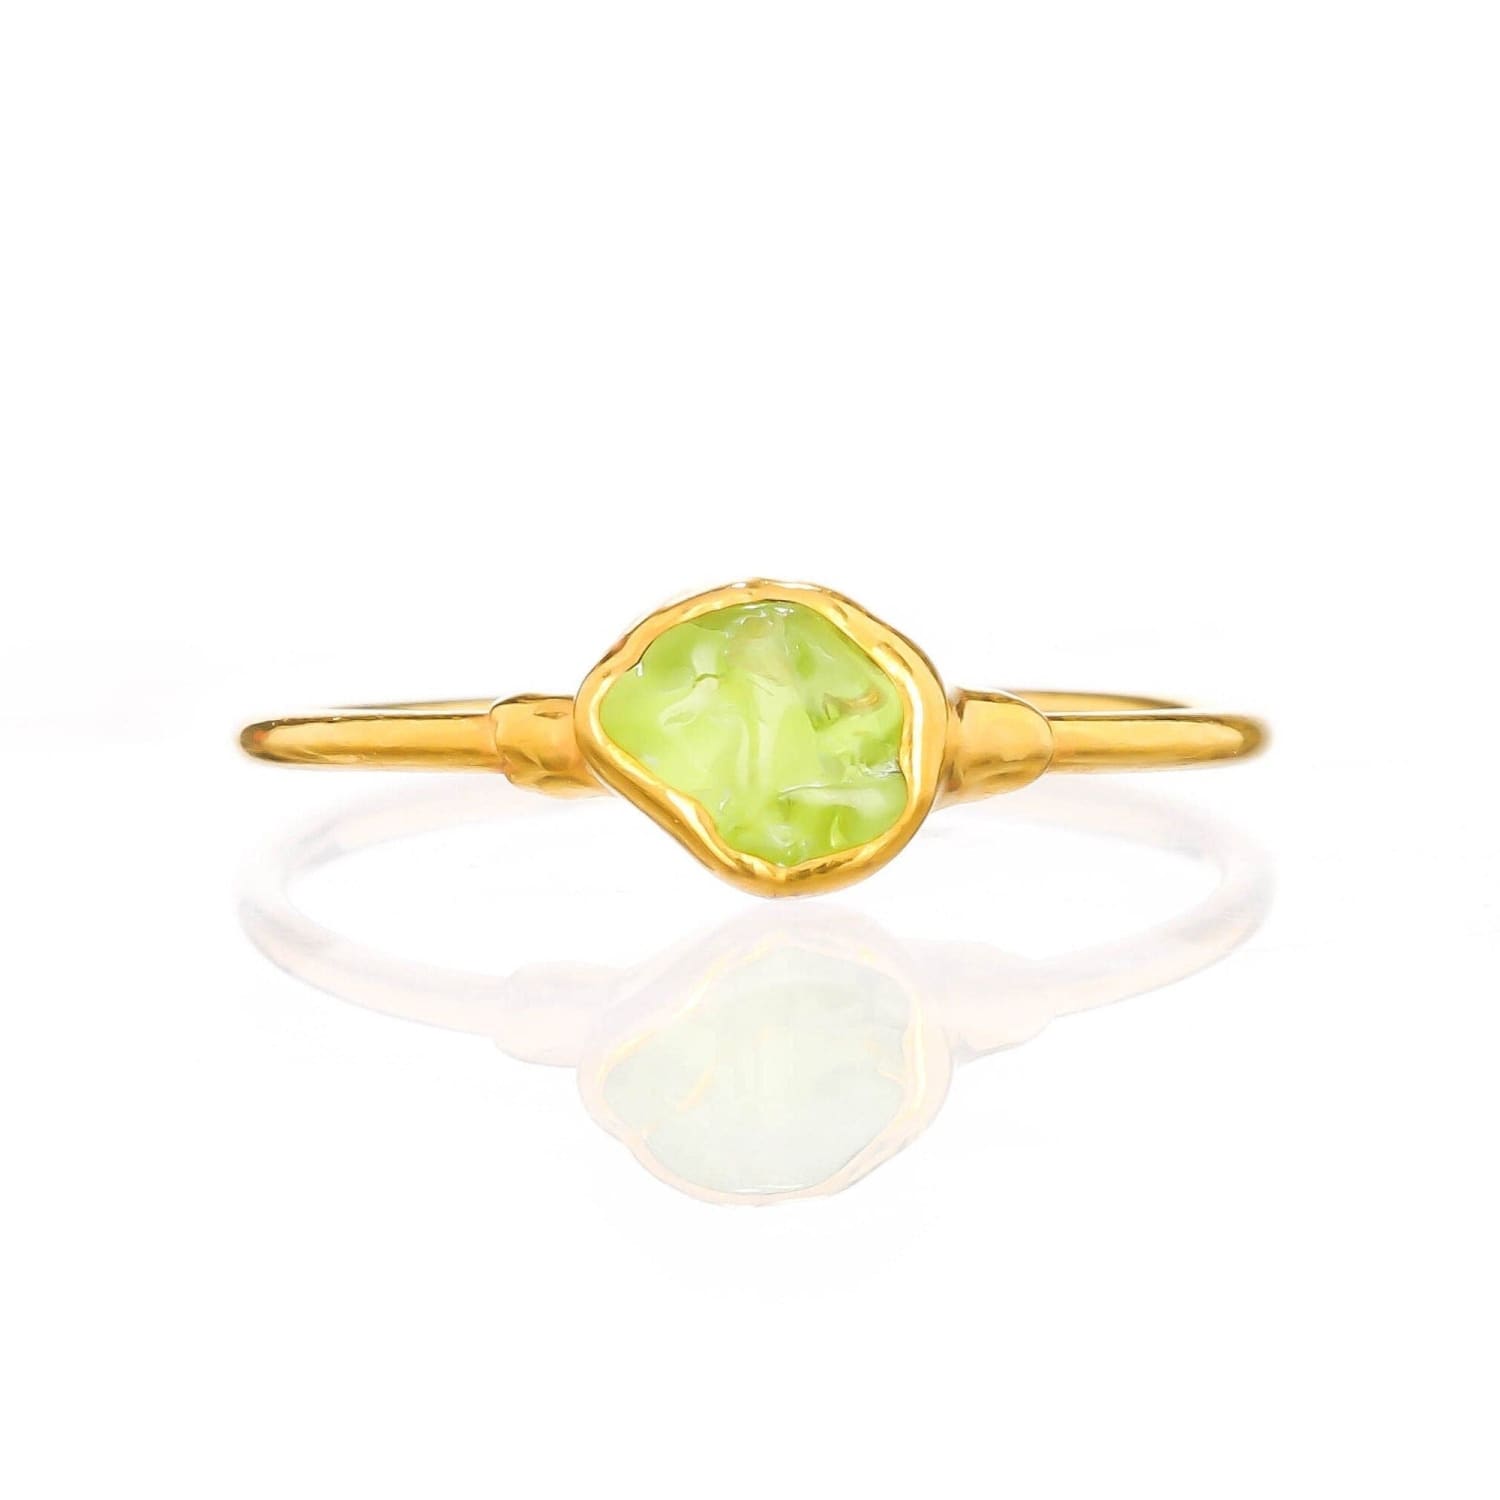 Buy Peridot ring, Olive green ring, Genuine peridot silver ring online at  aStudio1980.com